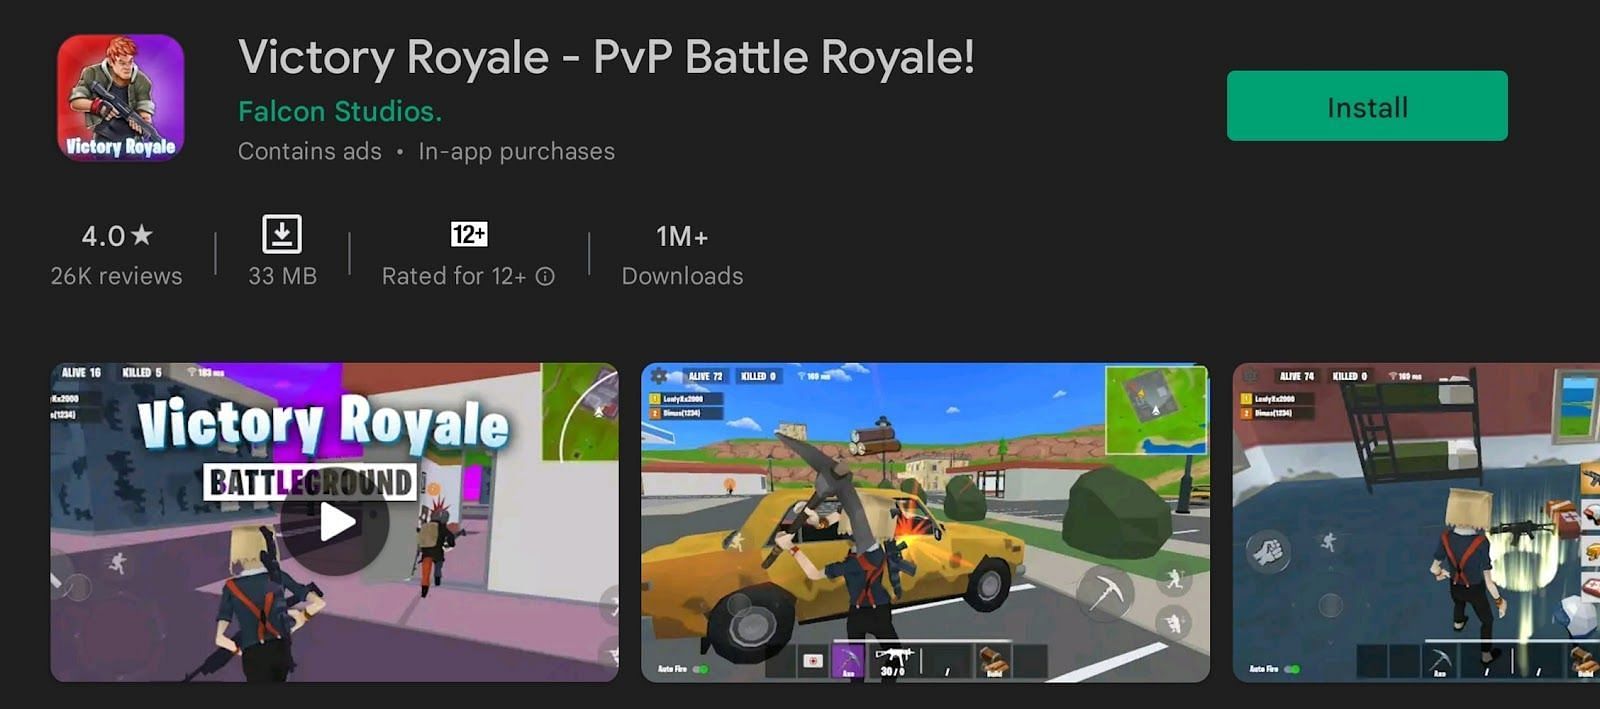 Victory Royale - PvP Battle Royale (Image via Google Play Store)